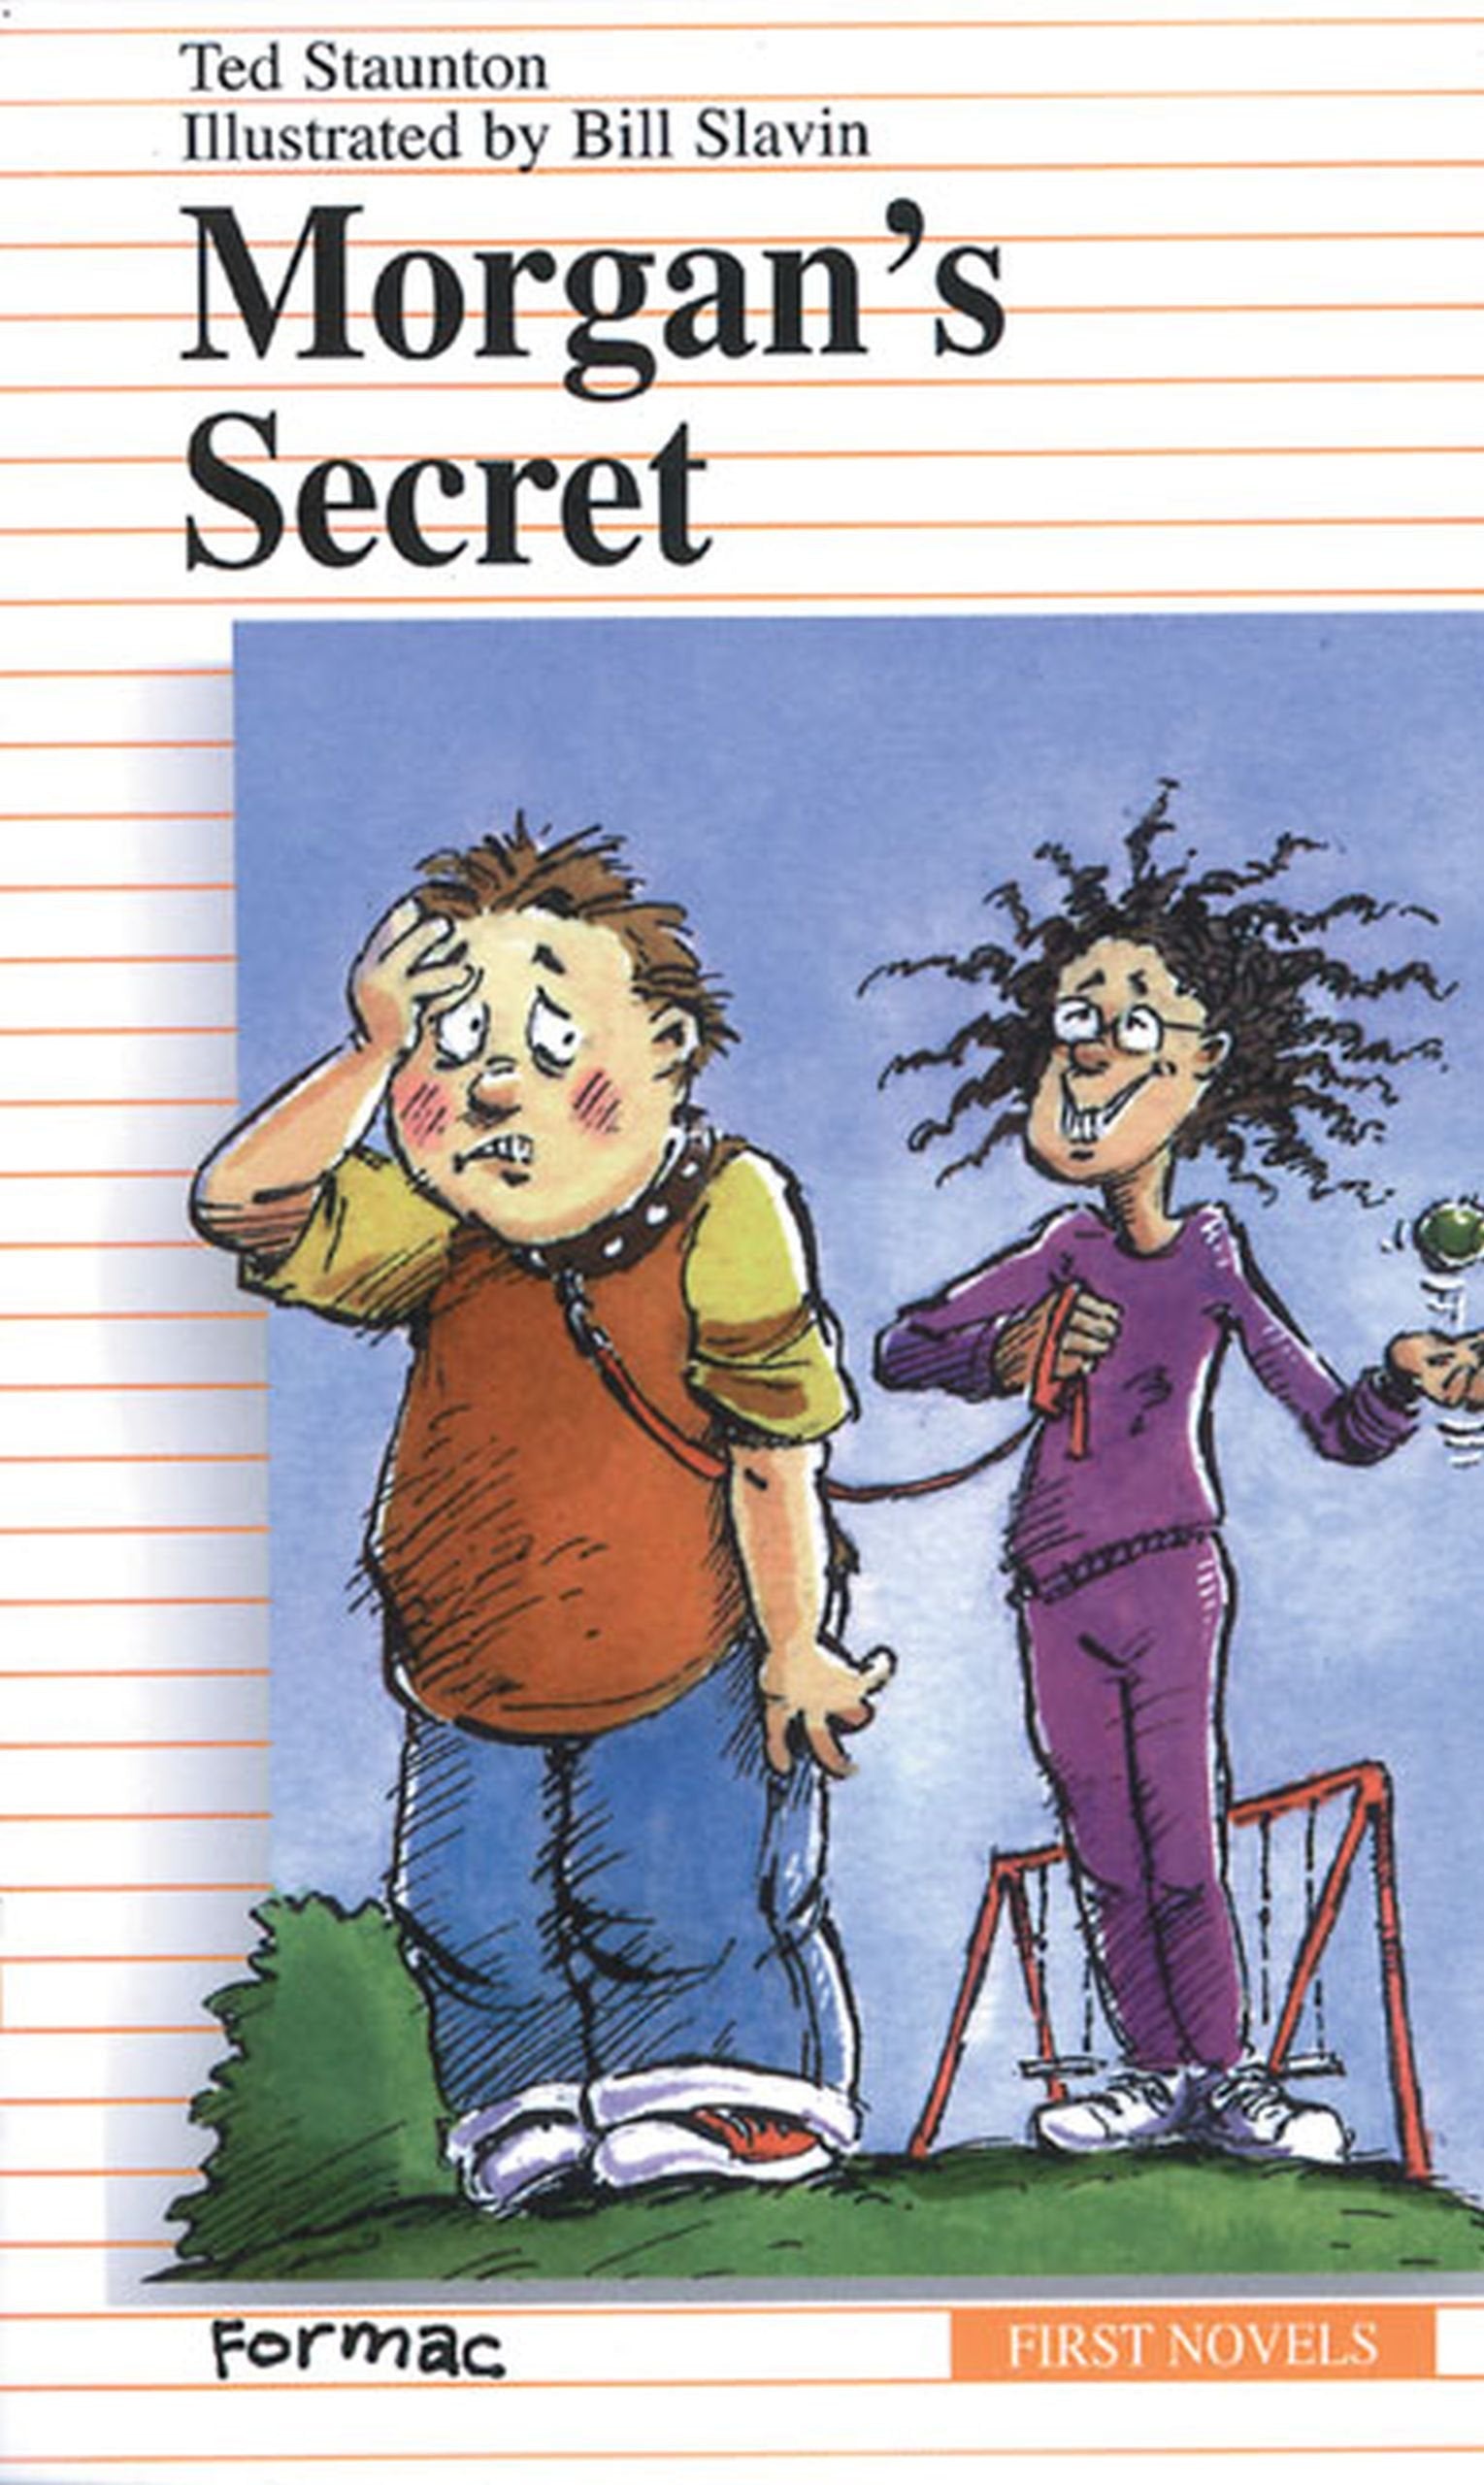 First Novel : Morgan's Secret - Ted Stauton